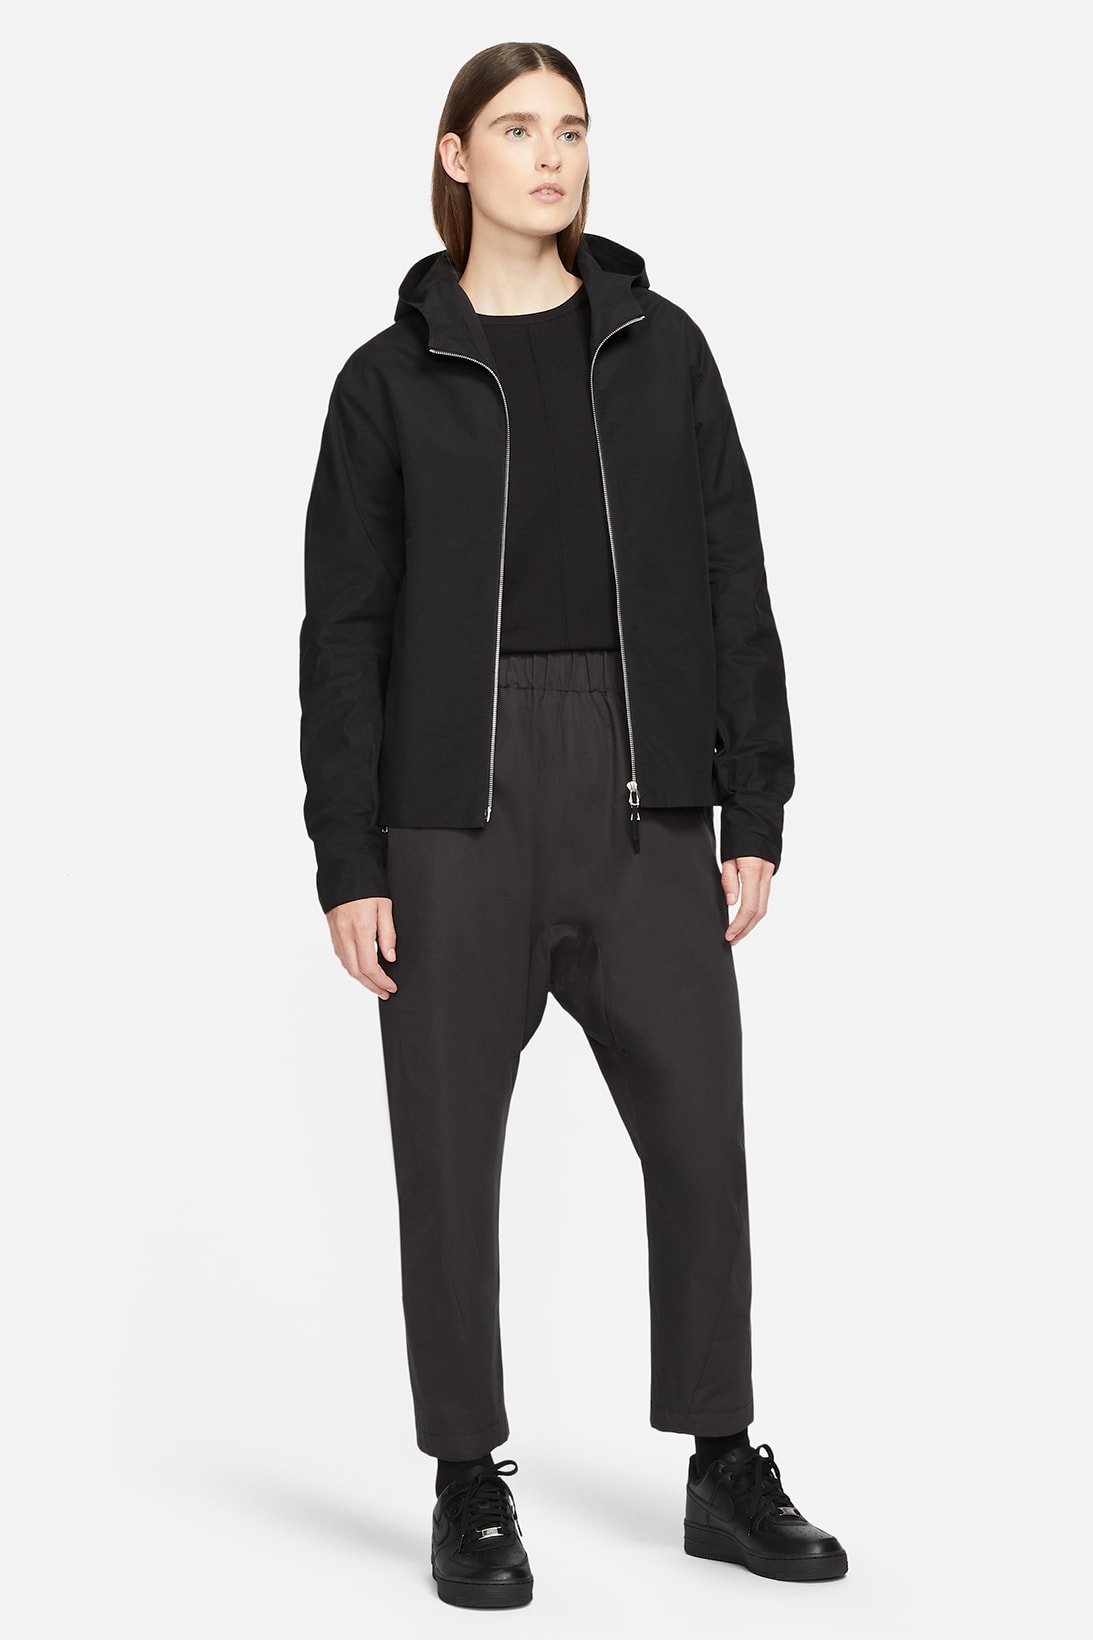 nike design exploration apparel collection outerwear jacket pants